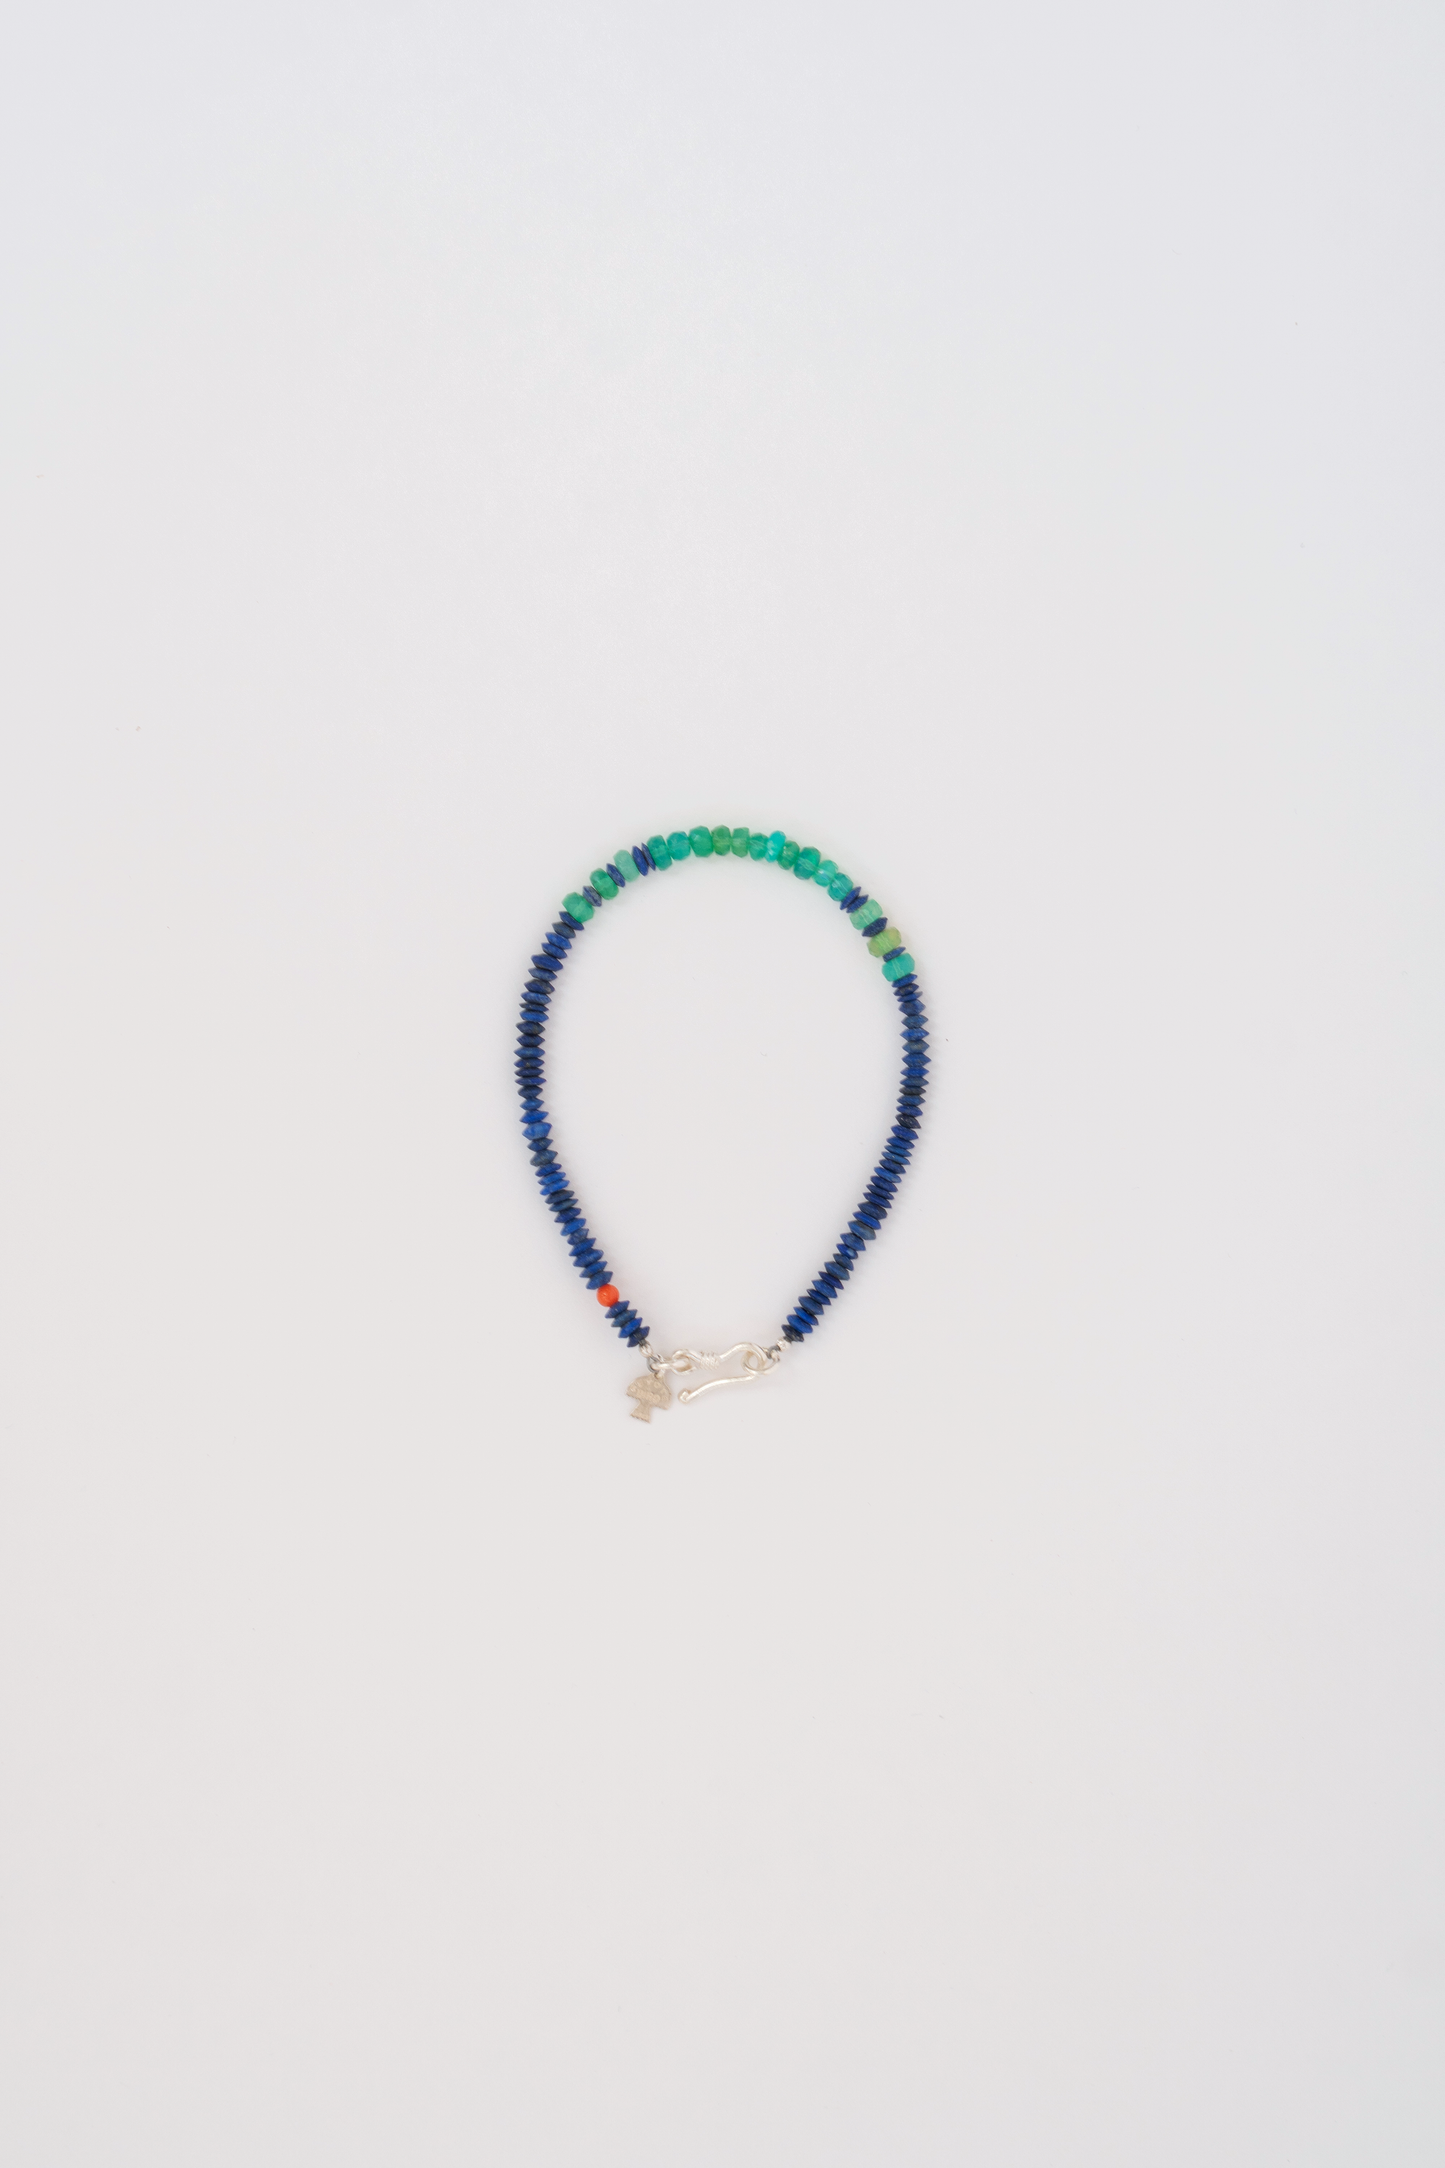 Peyote Bird - Pacific Oasis bracelet